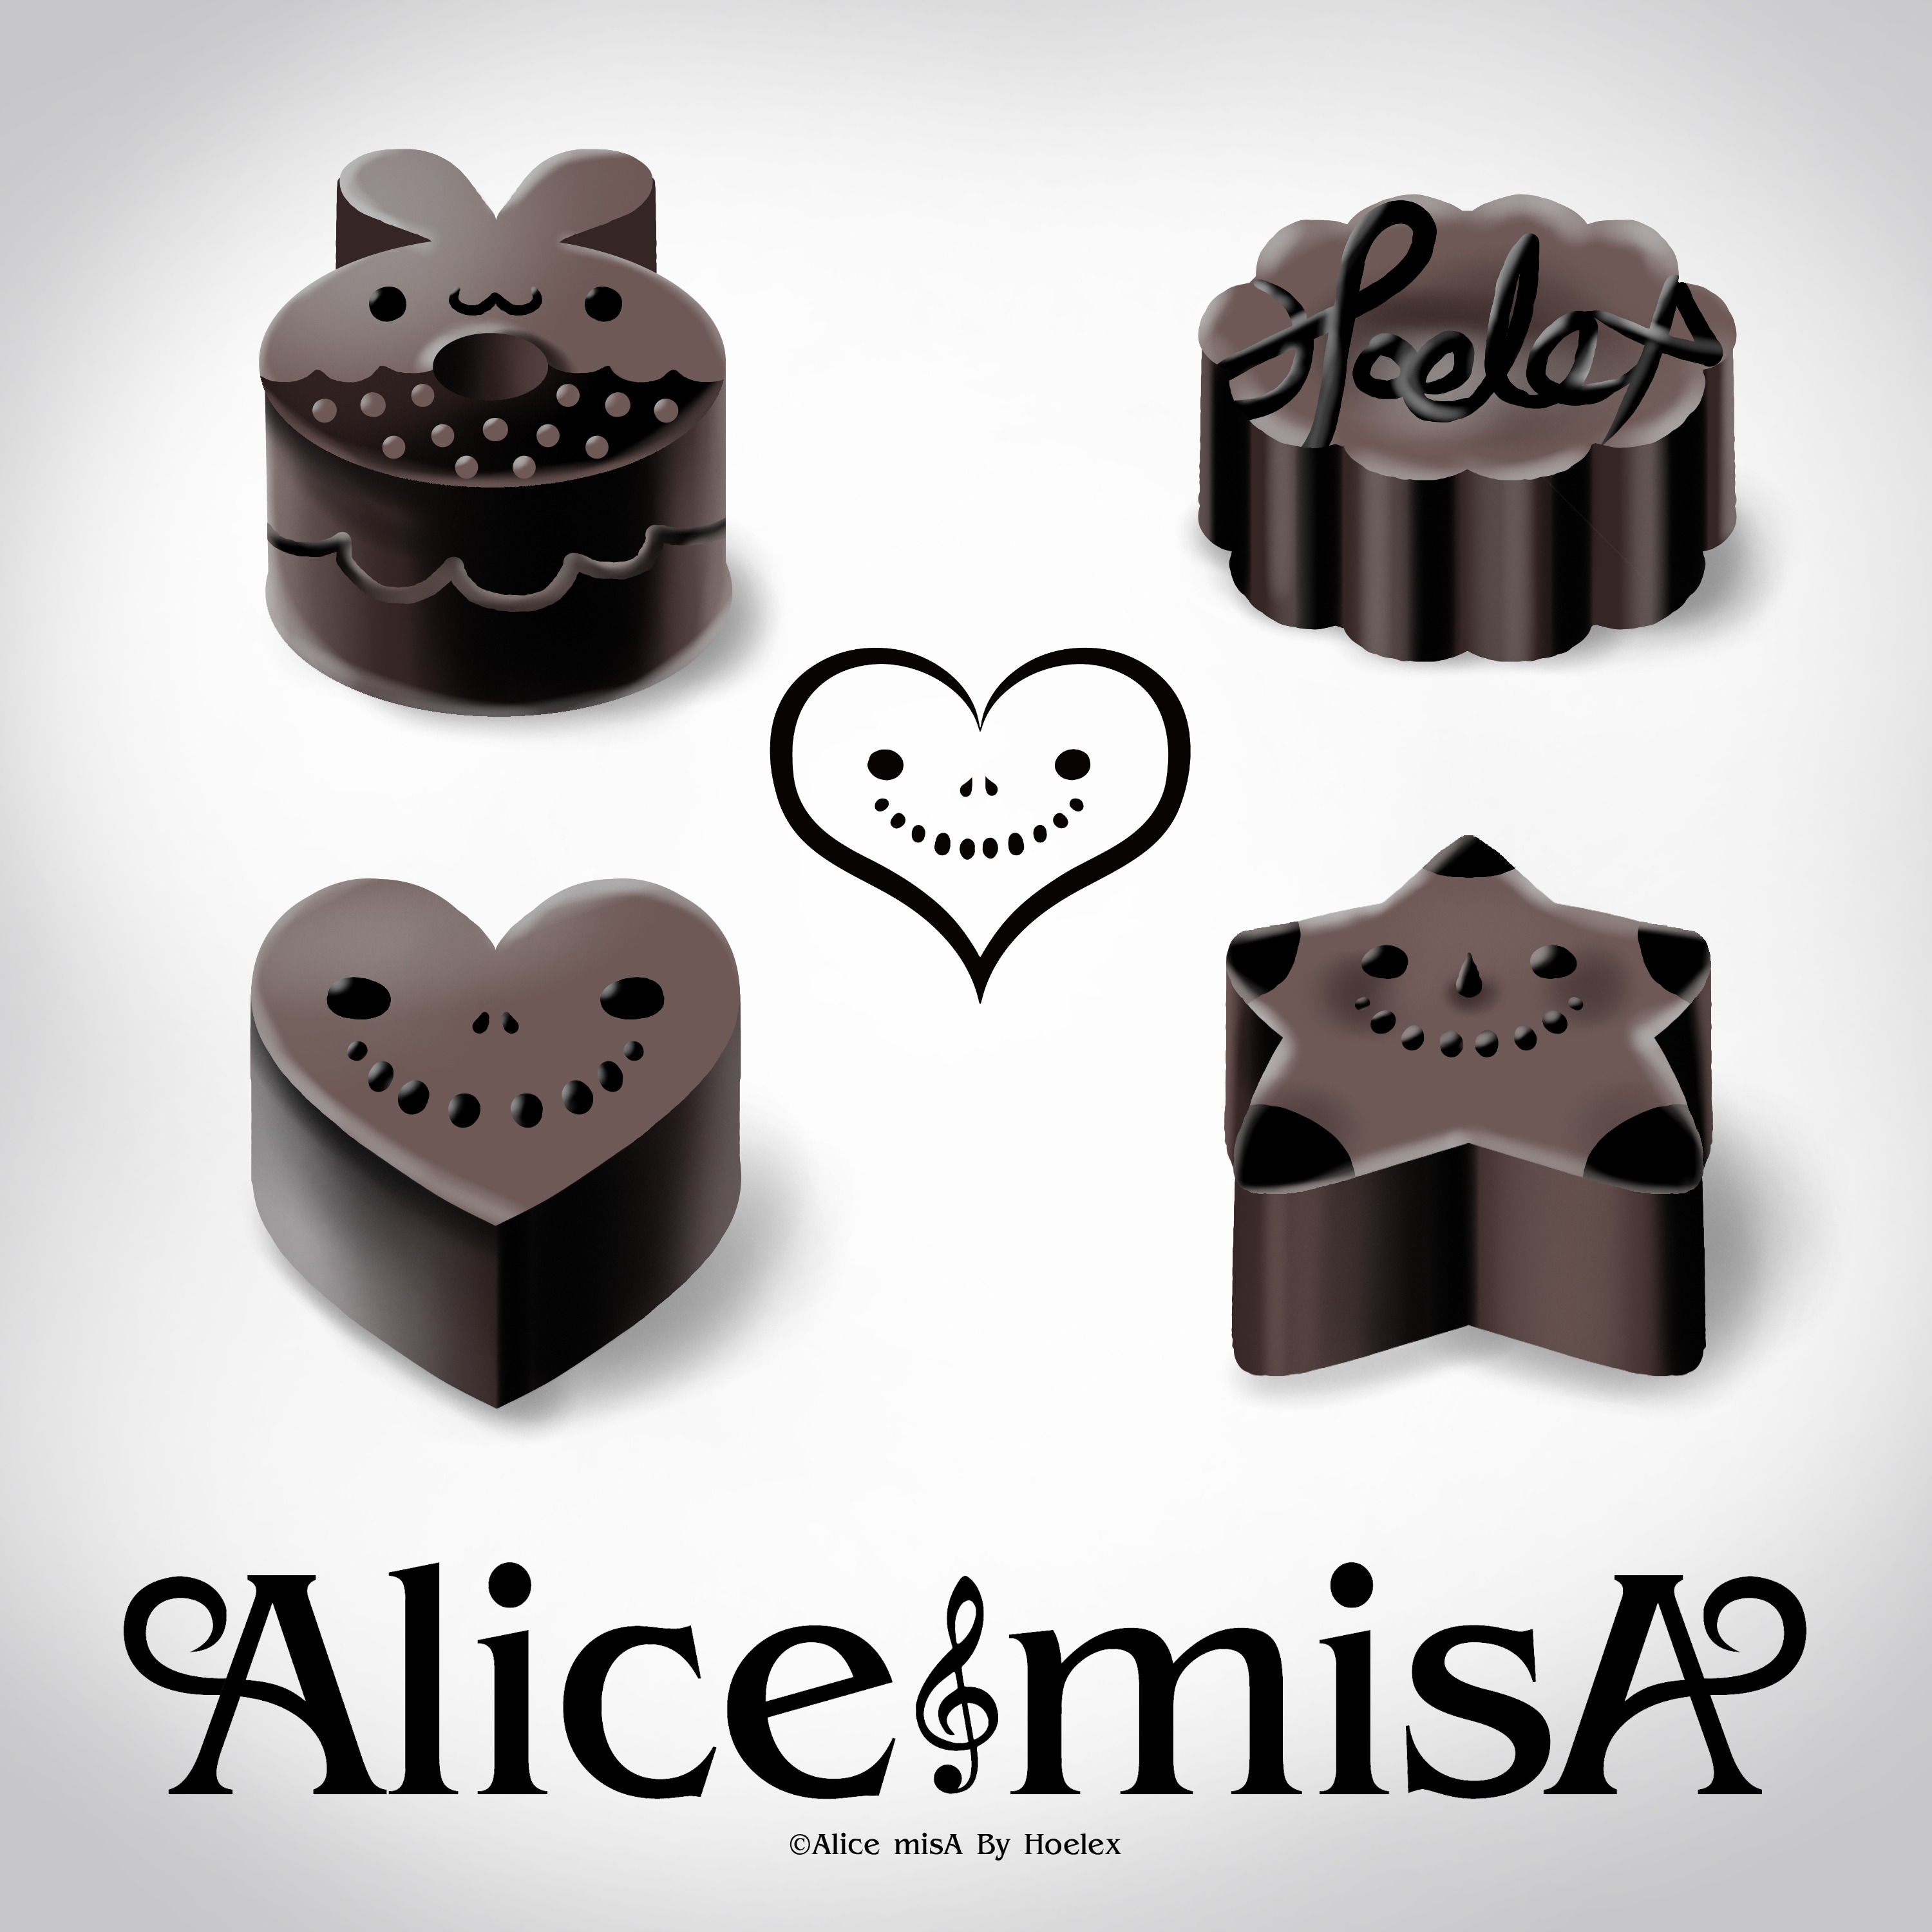 創意月餅creative mooncakes-Alice misA心夢月餅-Hoelex.jpg